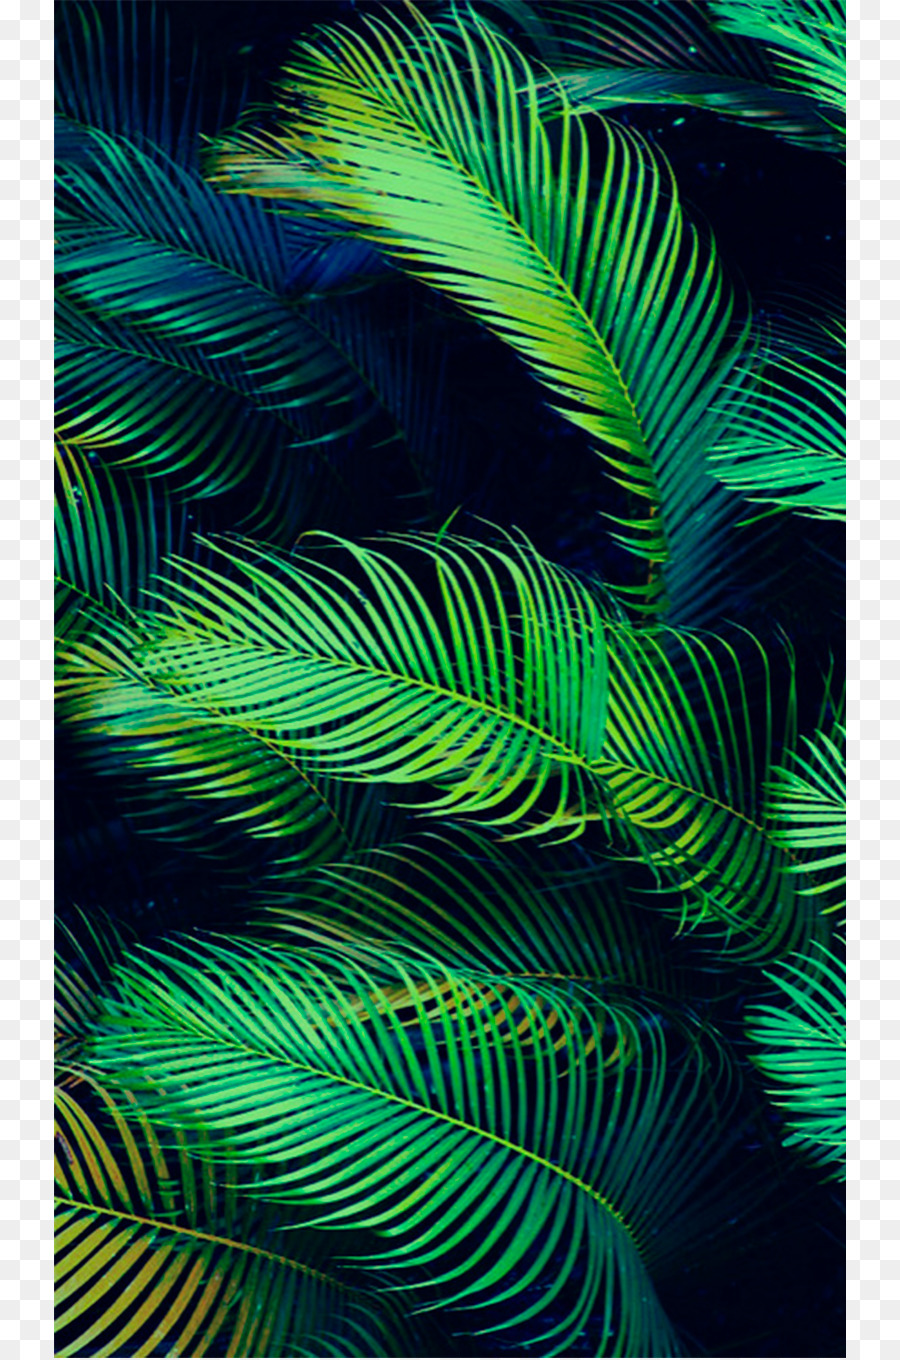 Palm Leaves Wallpaper Iphone 7 - HD Wallpaper 